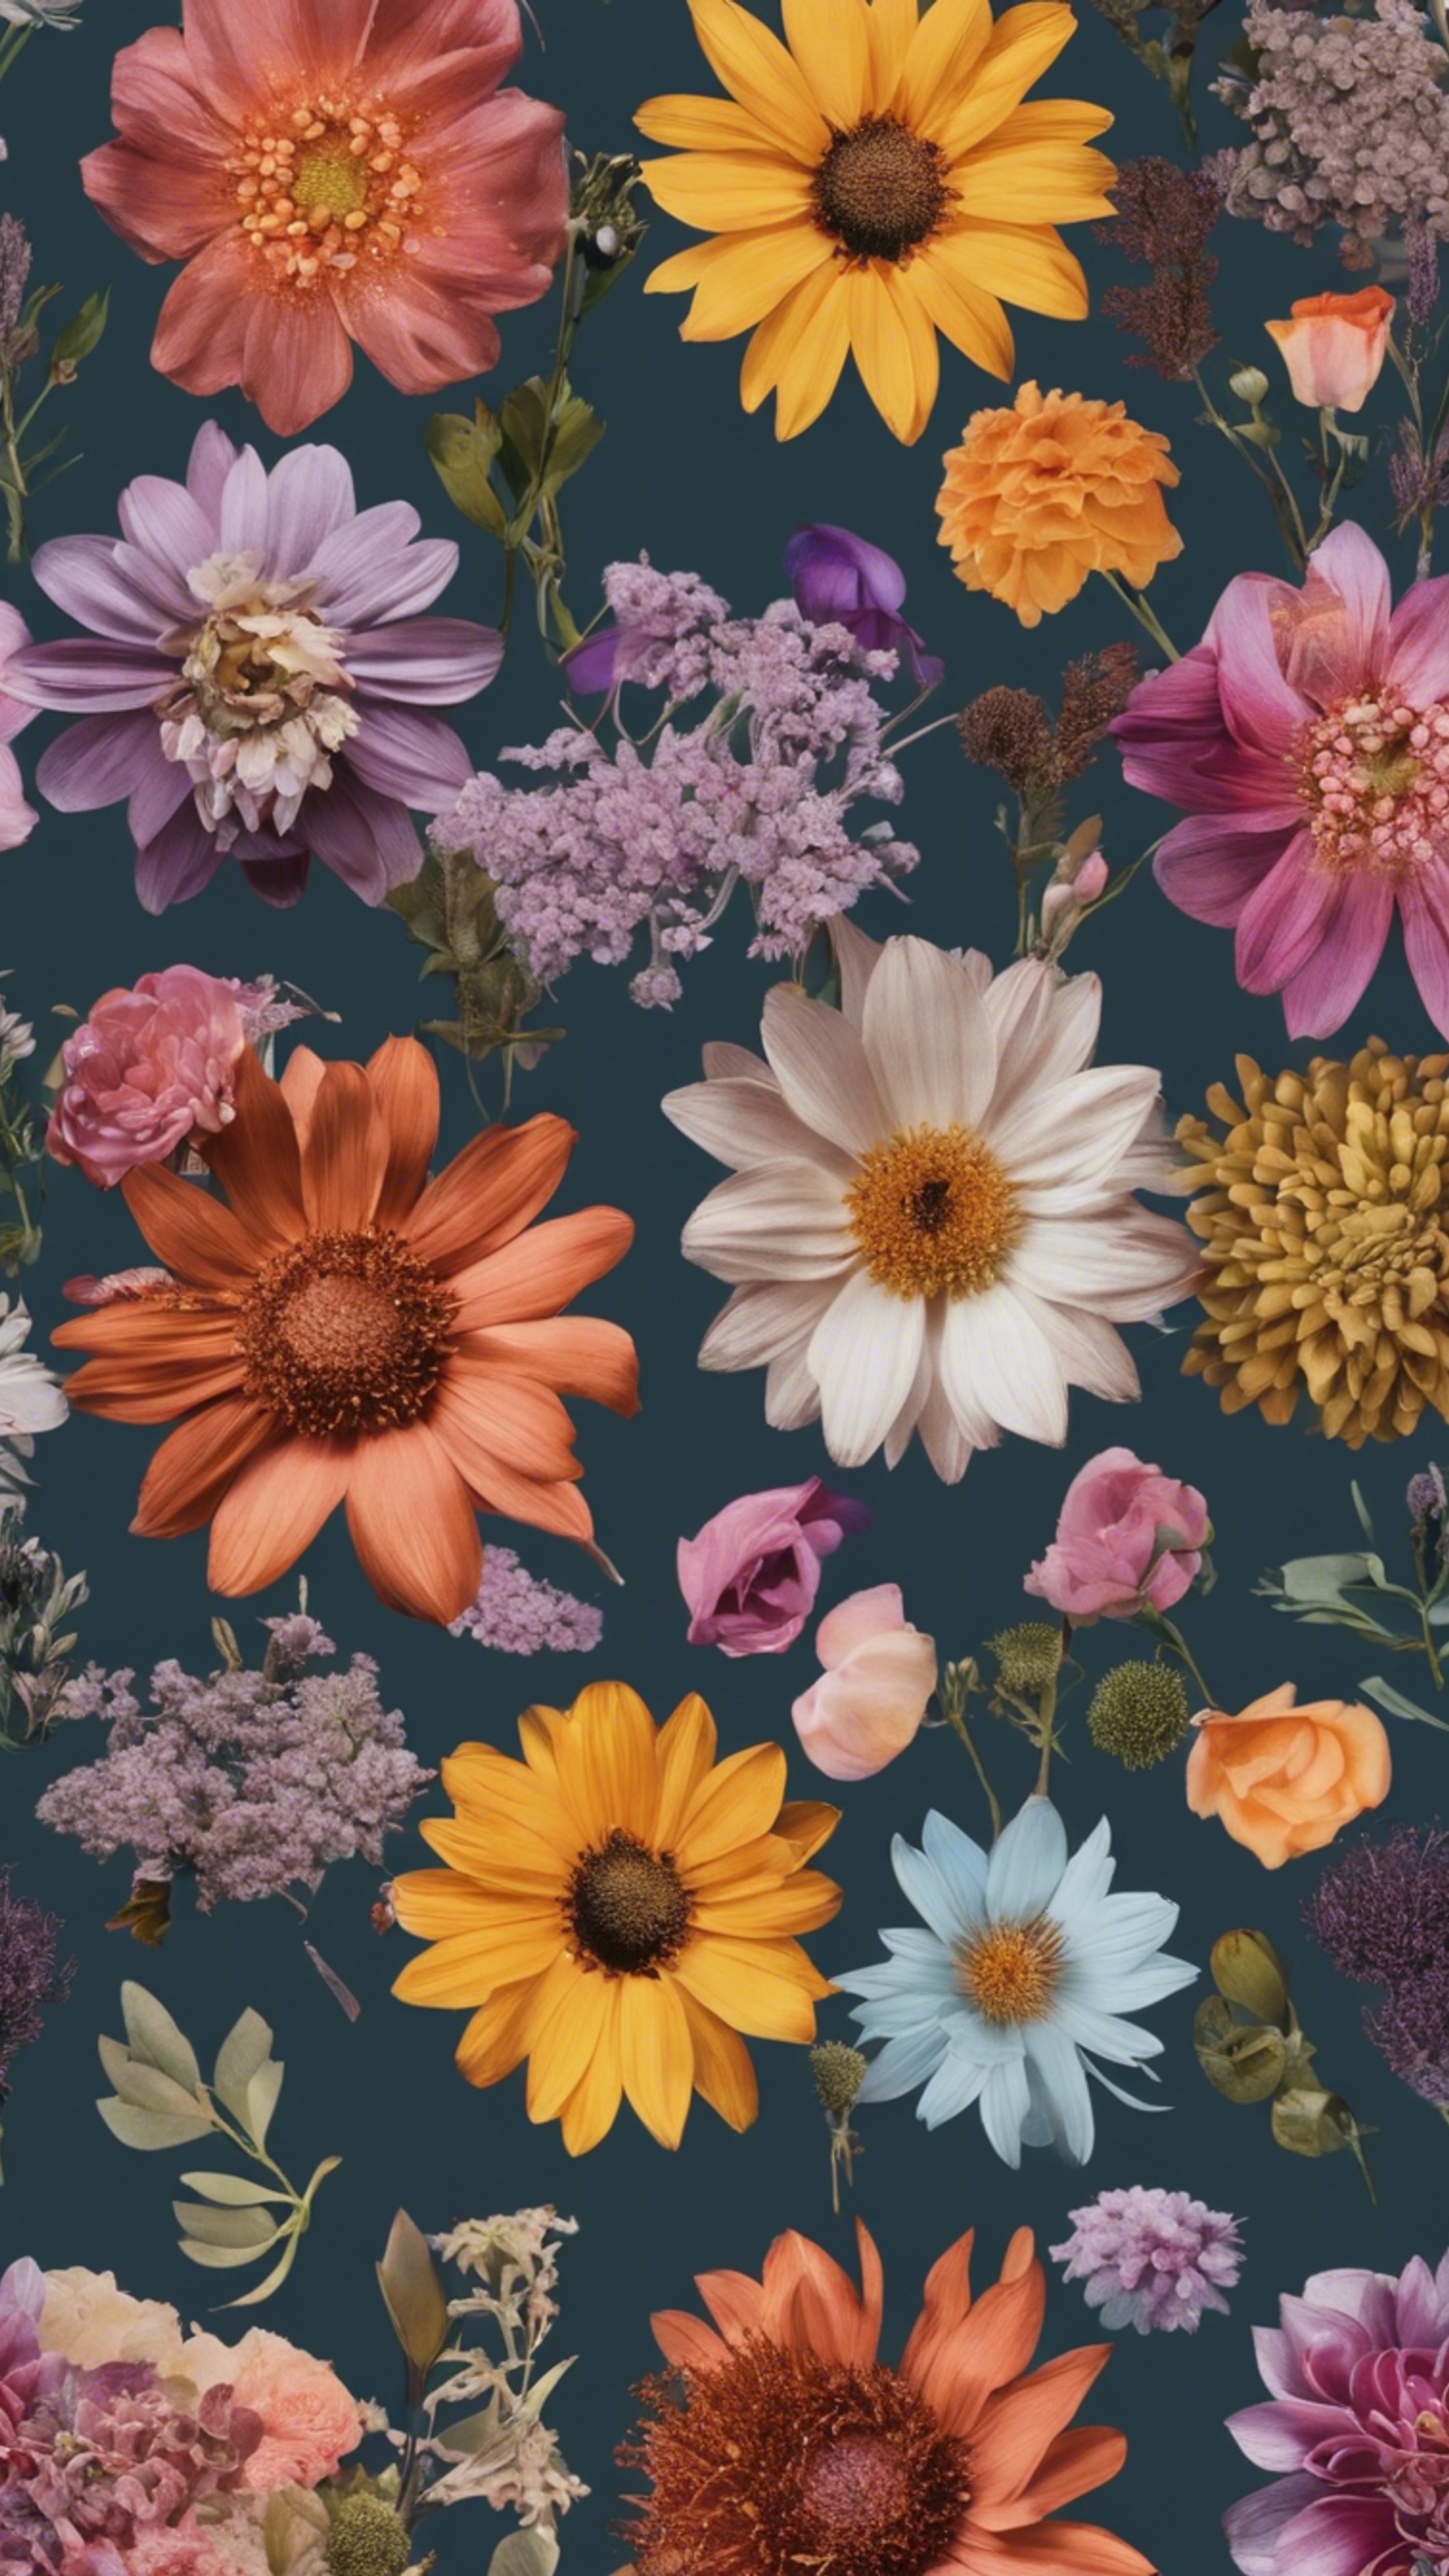 Multiple flowers of different types and colors, distinctively arranged in a bohemian floral design pattern. Fond d'écran[d475d4e8f3a0489d92d5]